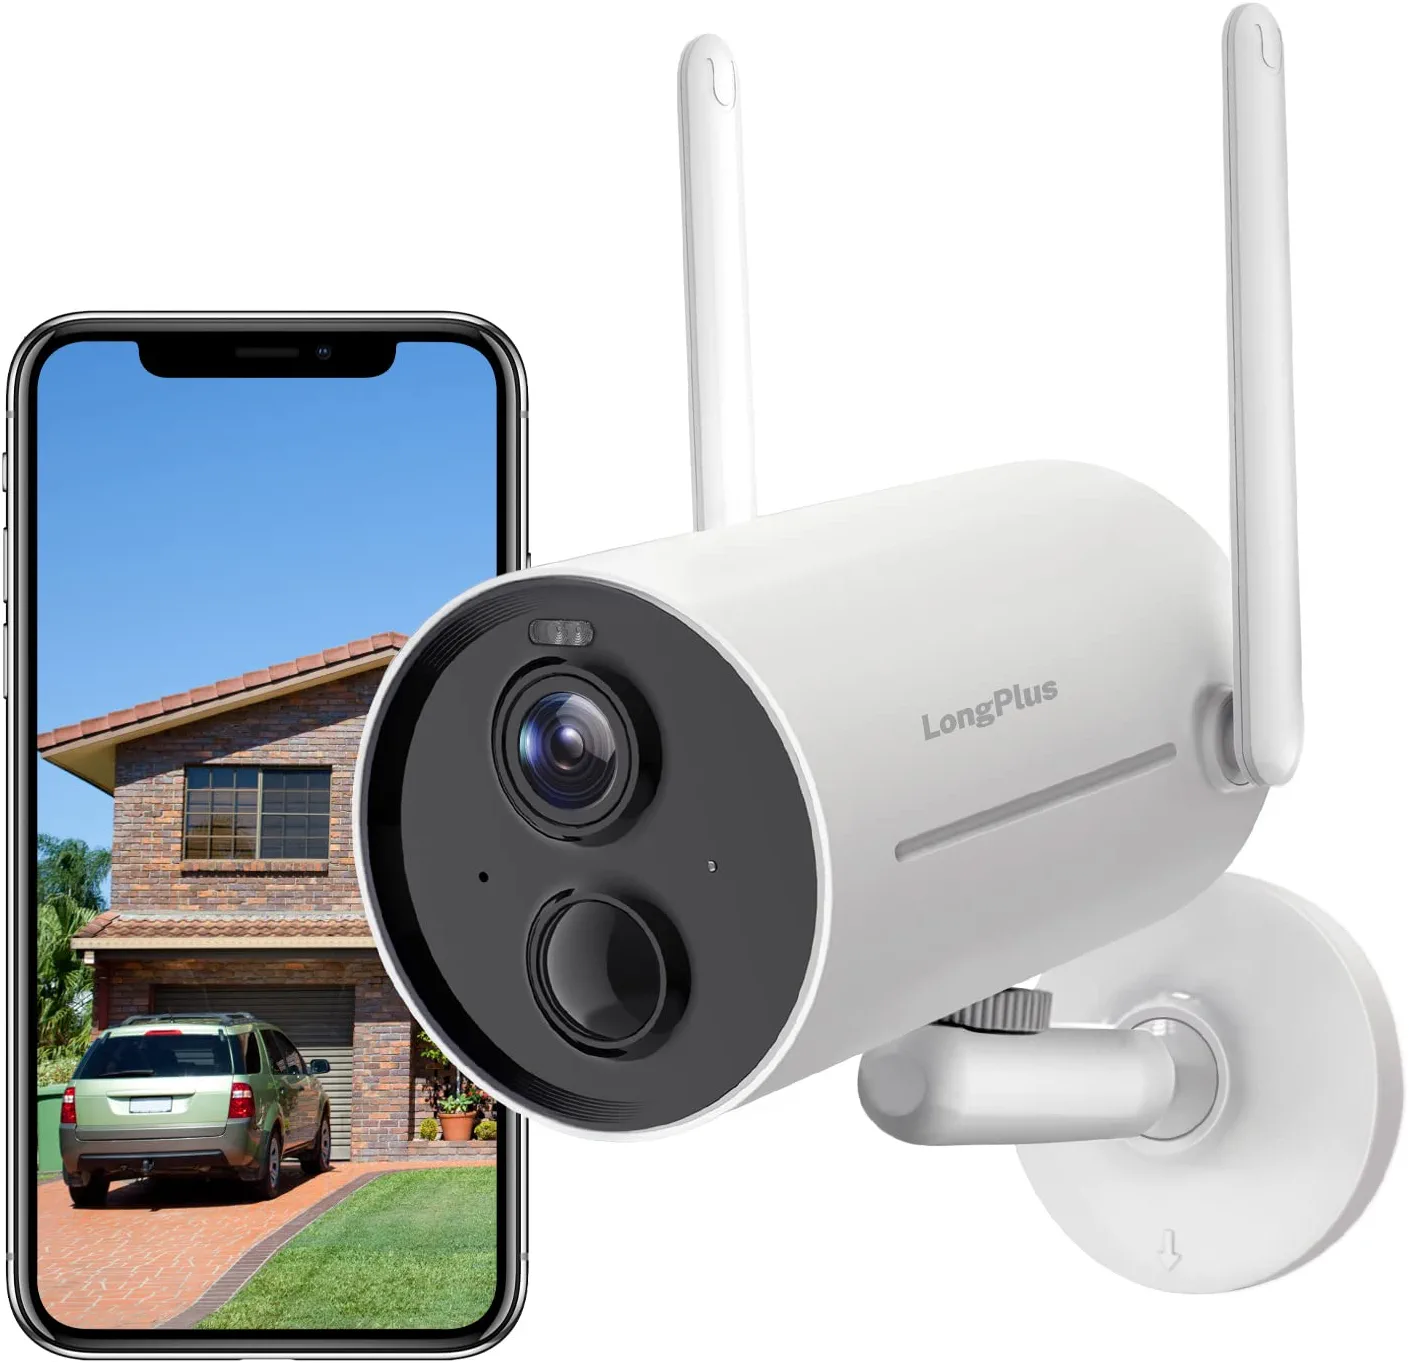 Wireless Security Camera System For Home丨LongPlus®